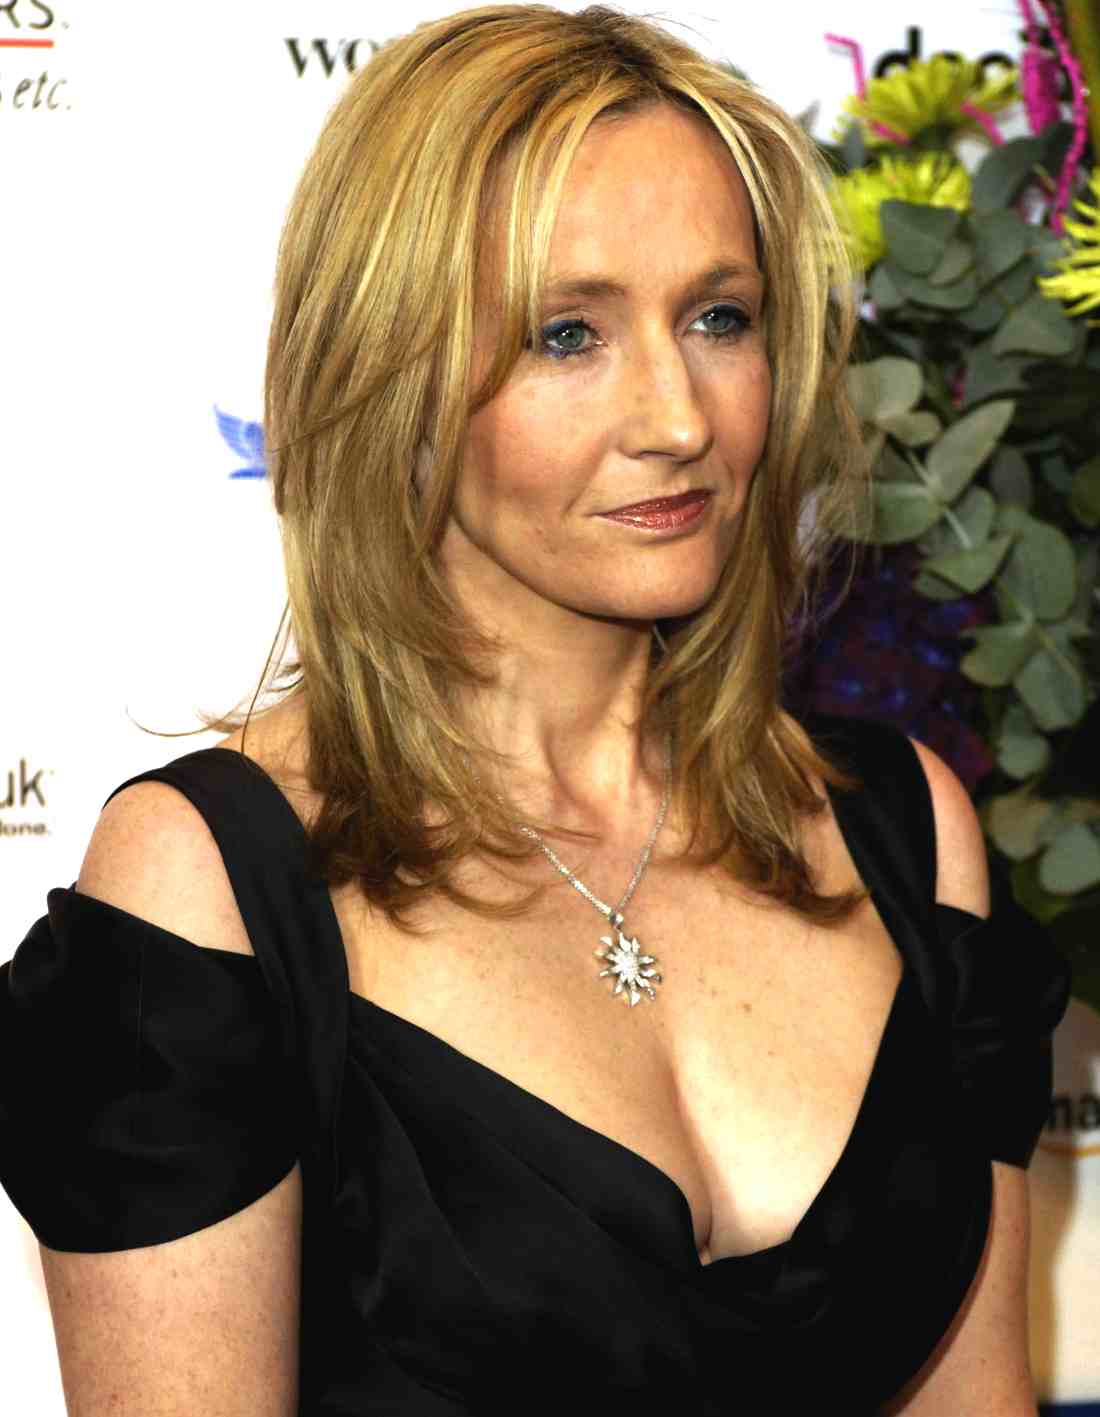 J K Rowling in evening attire